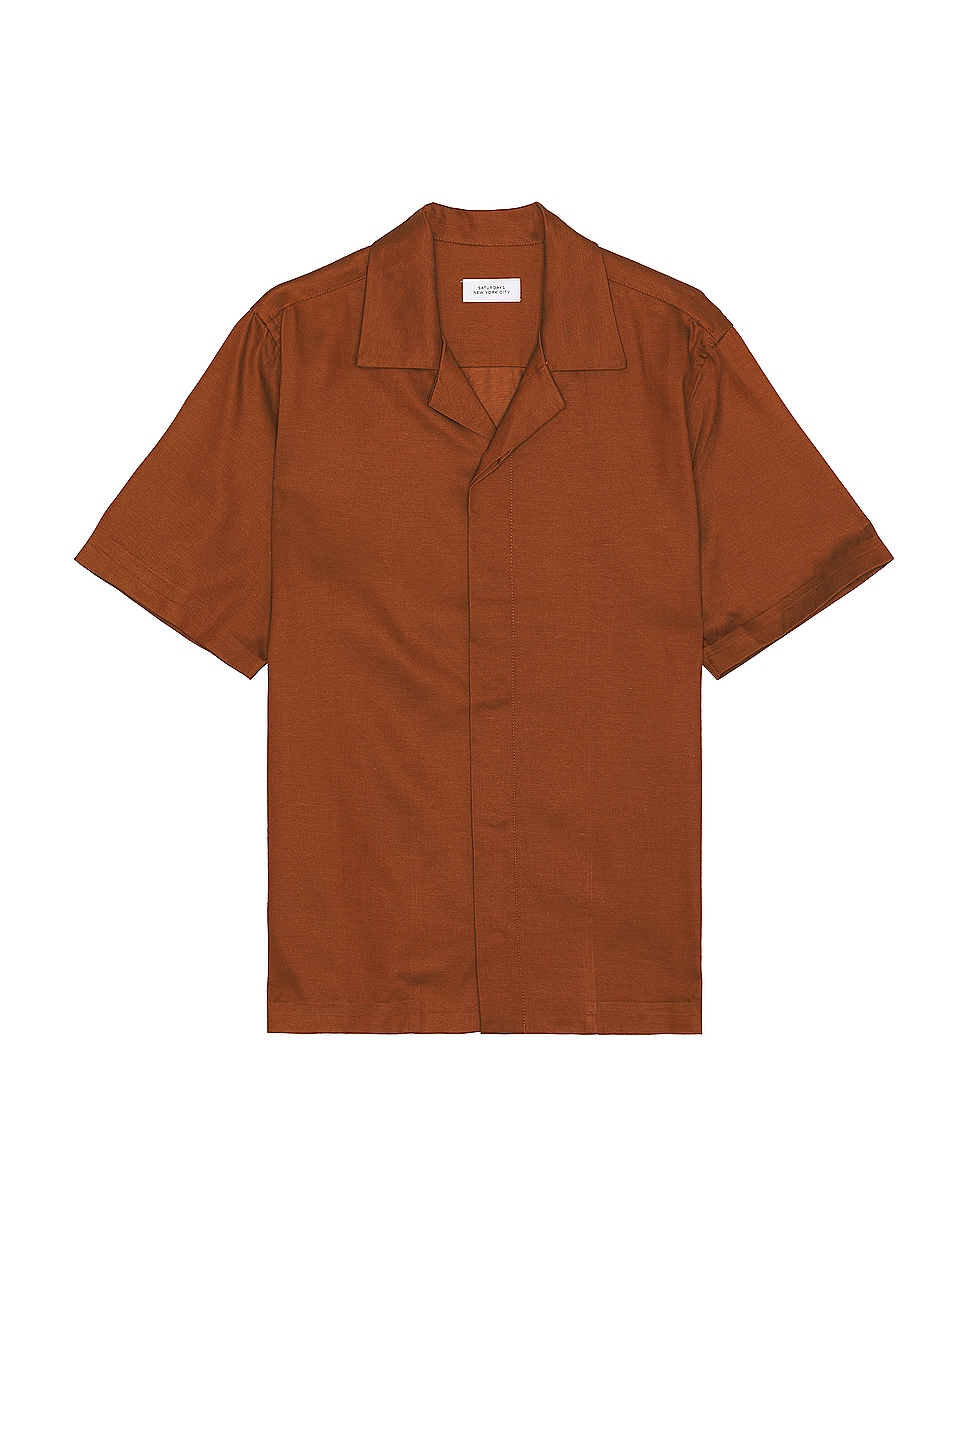 Image 1 of SATURDAYS NYC York Camp Collar Short Sleeve Shirt in Tortoise Shell